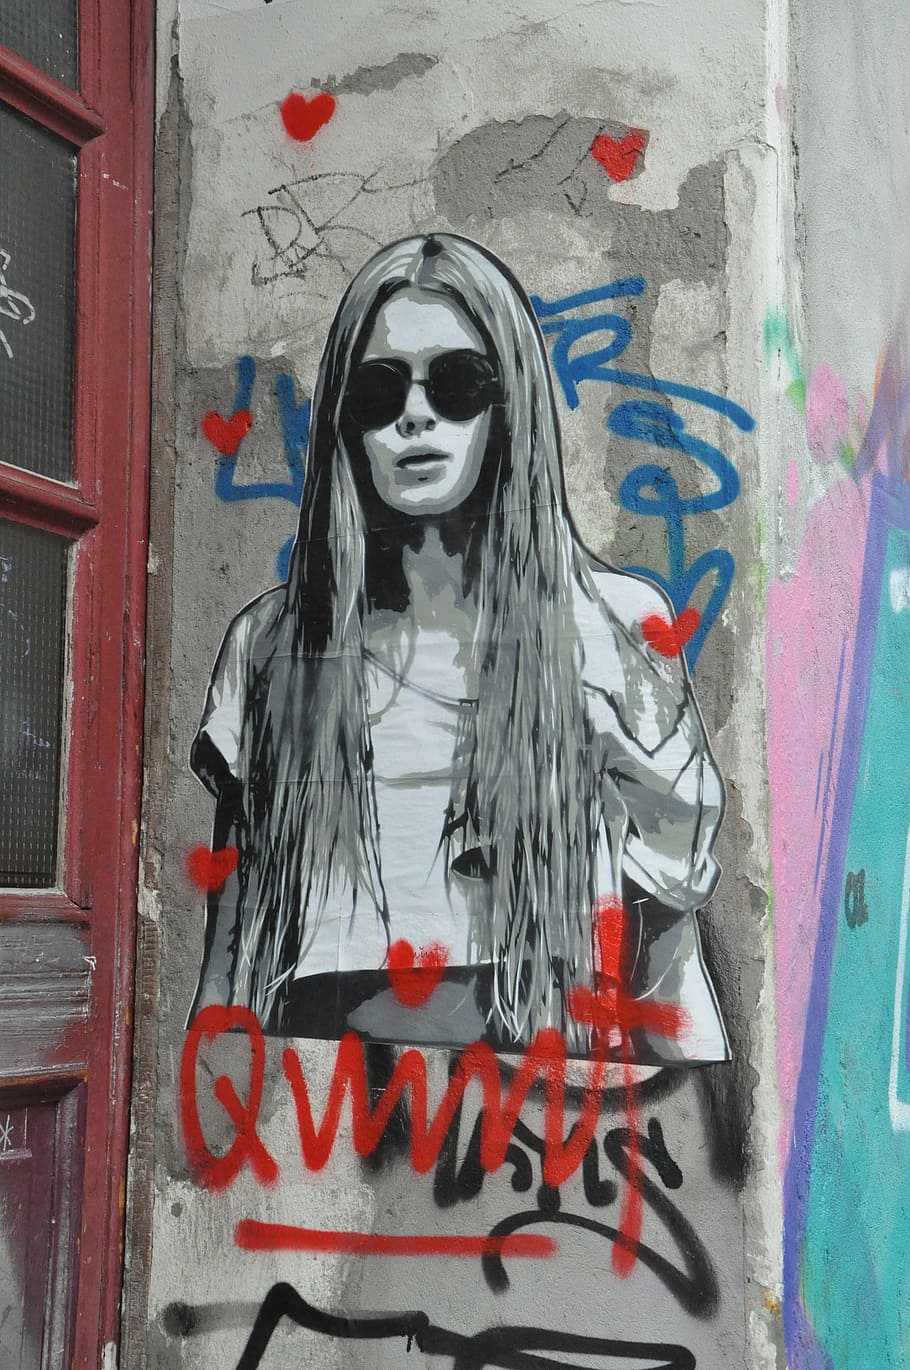 berlin, street art, graffiti, facade, mural, spray, urban spree, creativity, architecture, text